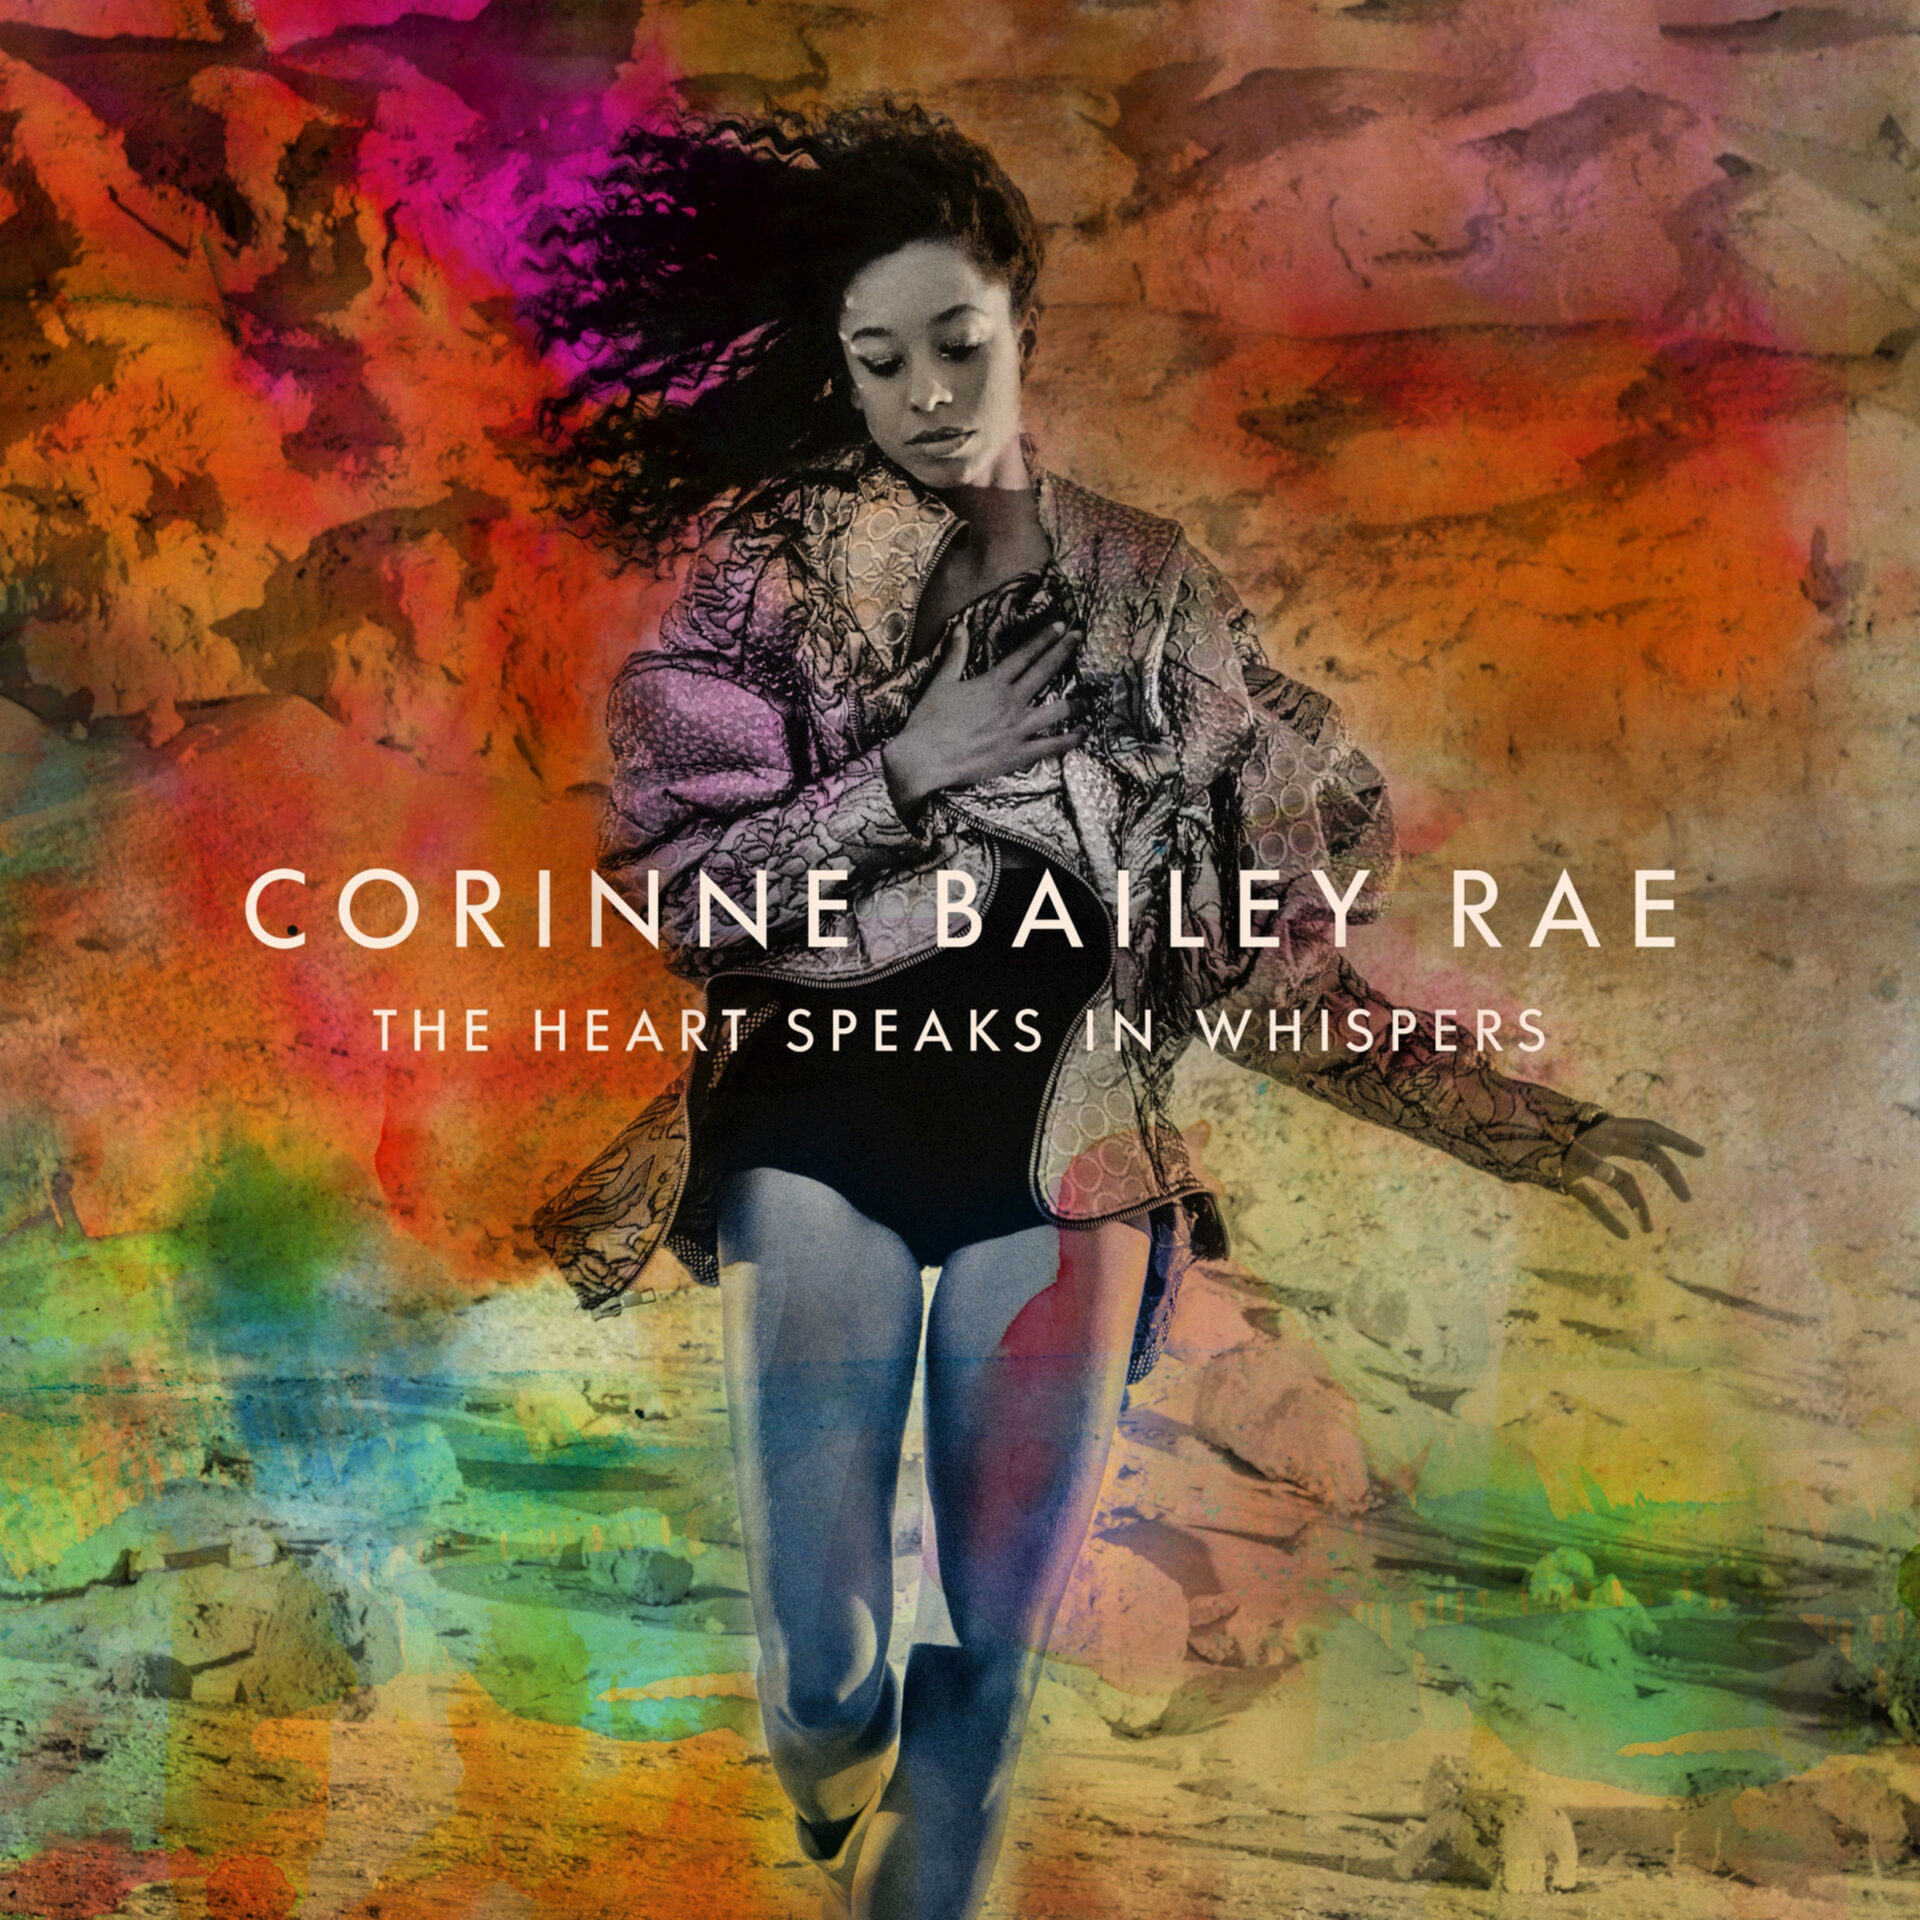 Corinne Bailey Rae - The Heart Speaks in Whispers (Virgin Records)